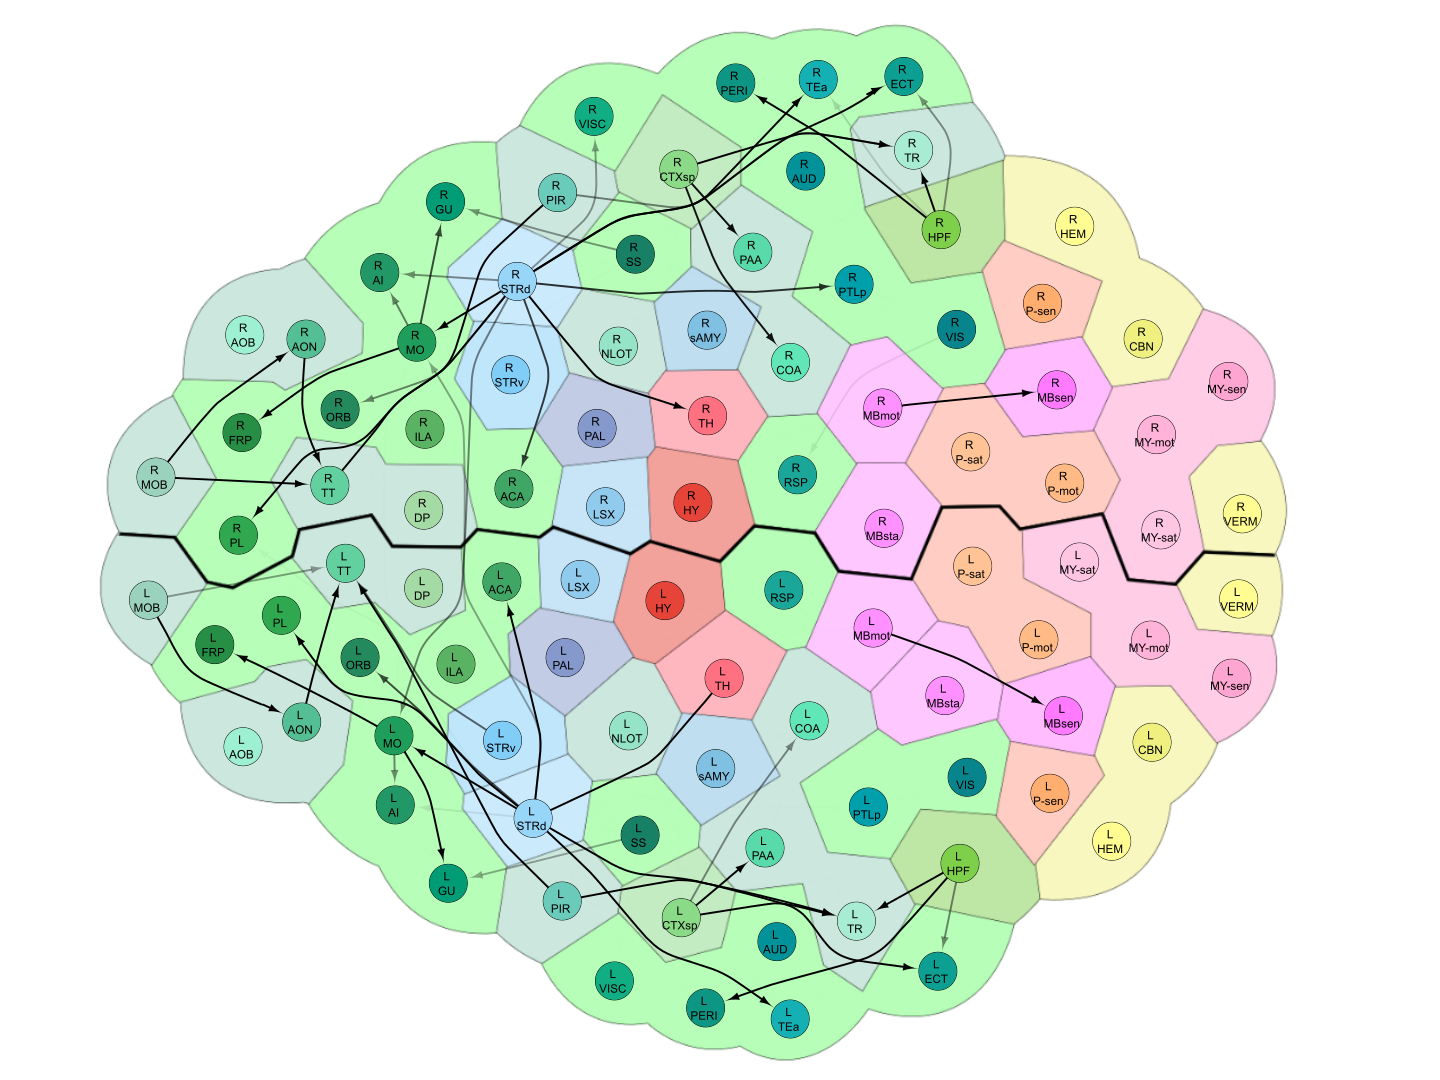 brain network